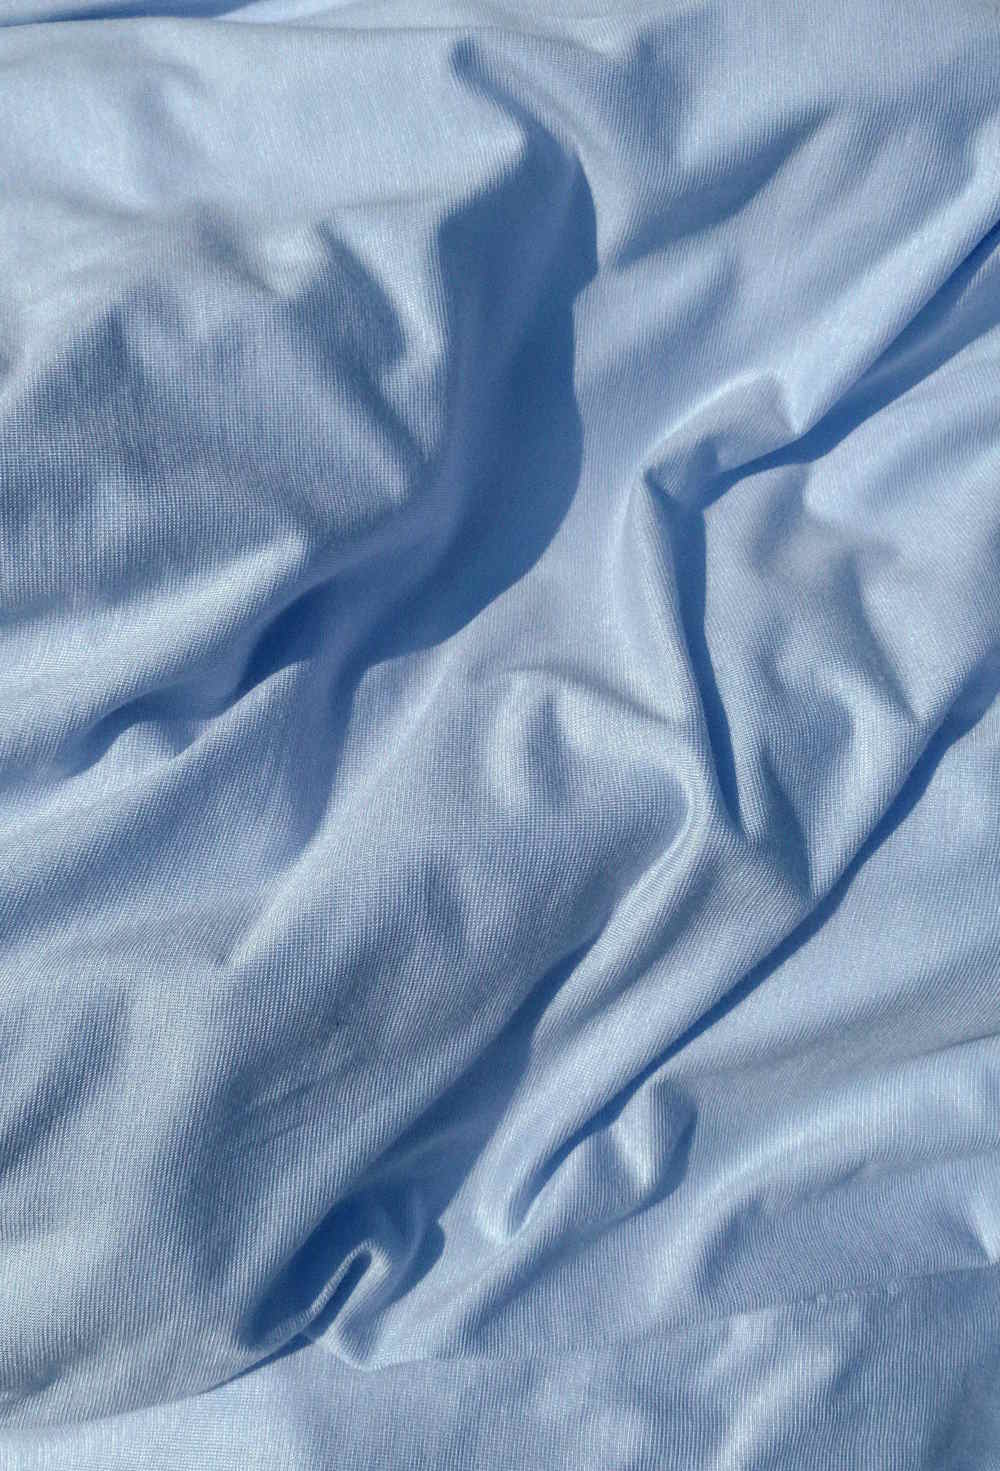 Soft blue fabric